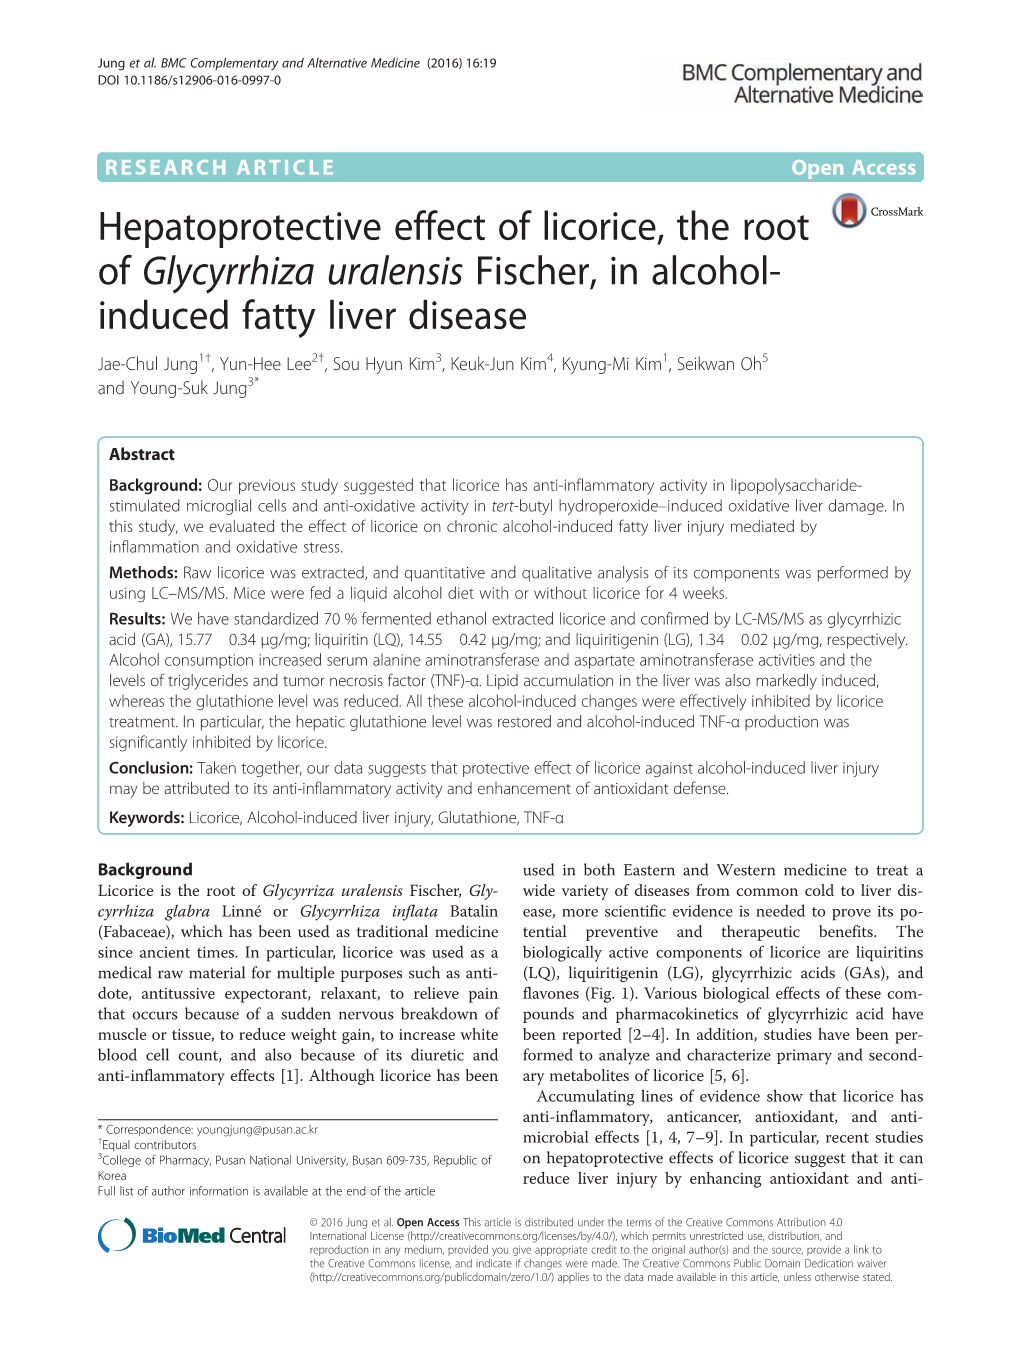 Hepatoprotective Effect of Licorice, the Root of Glycyrrhiza Uralensis Fischer